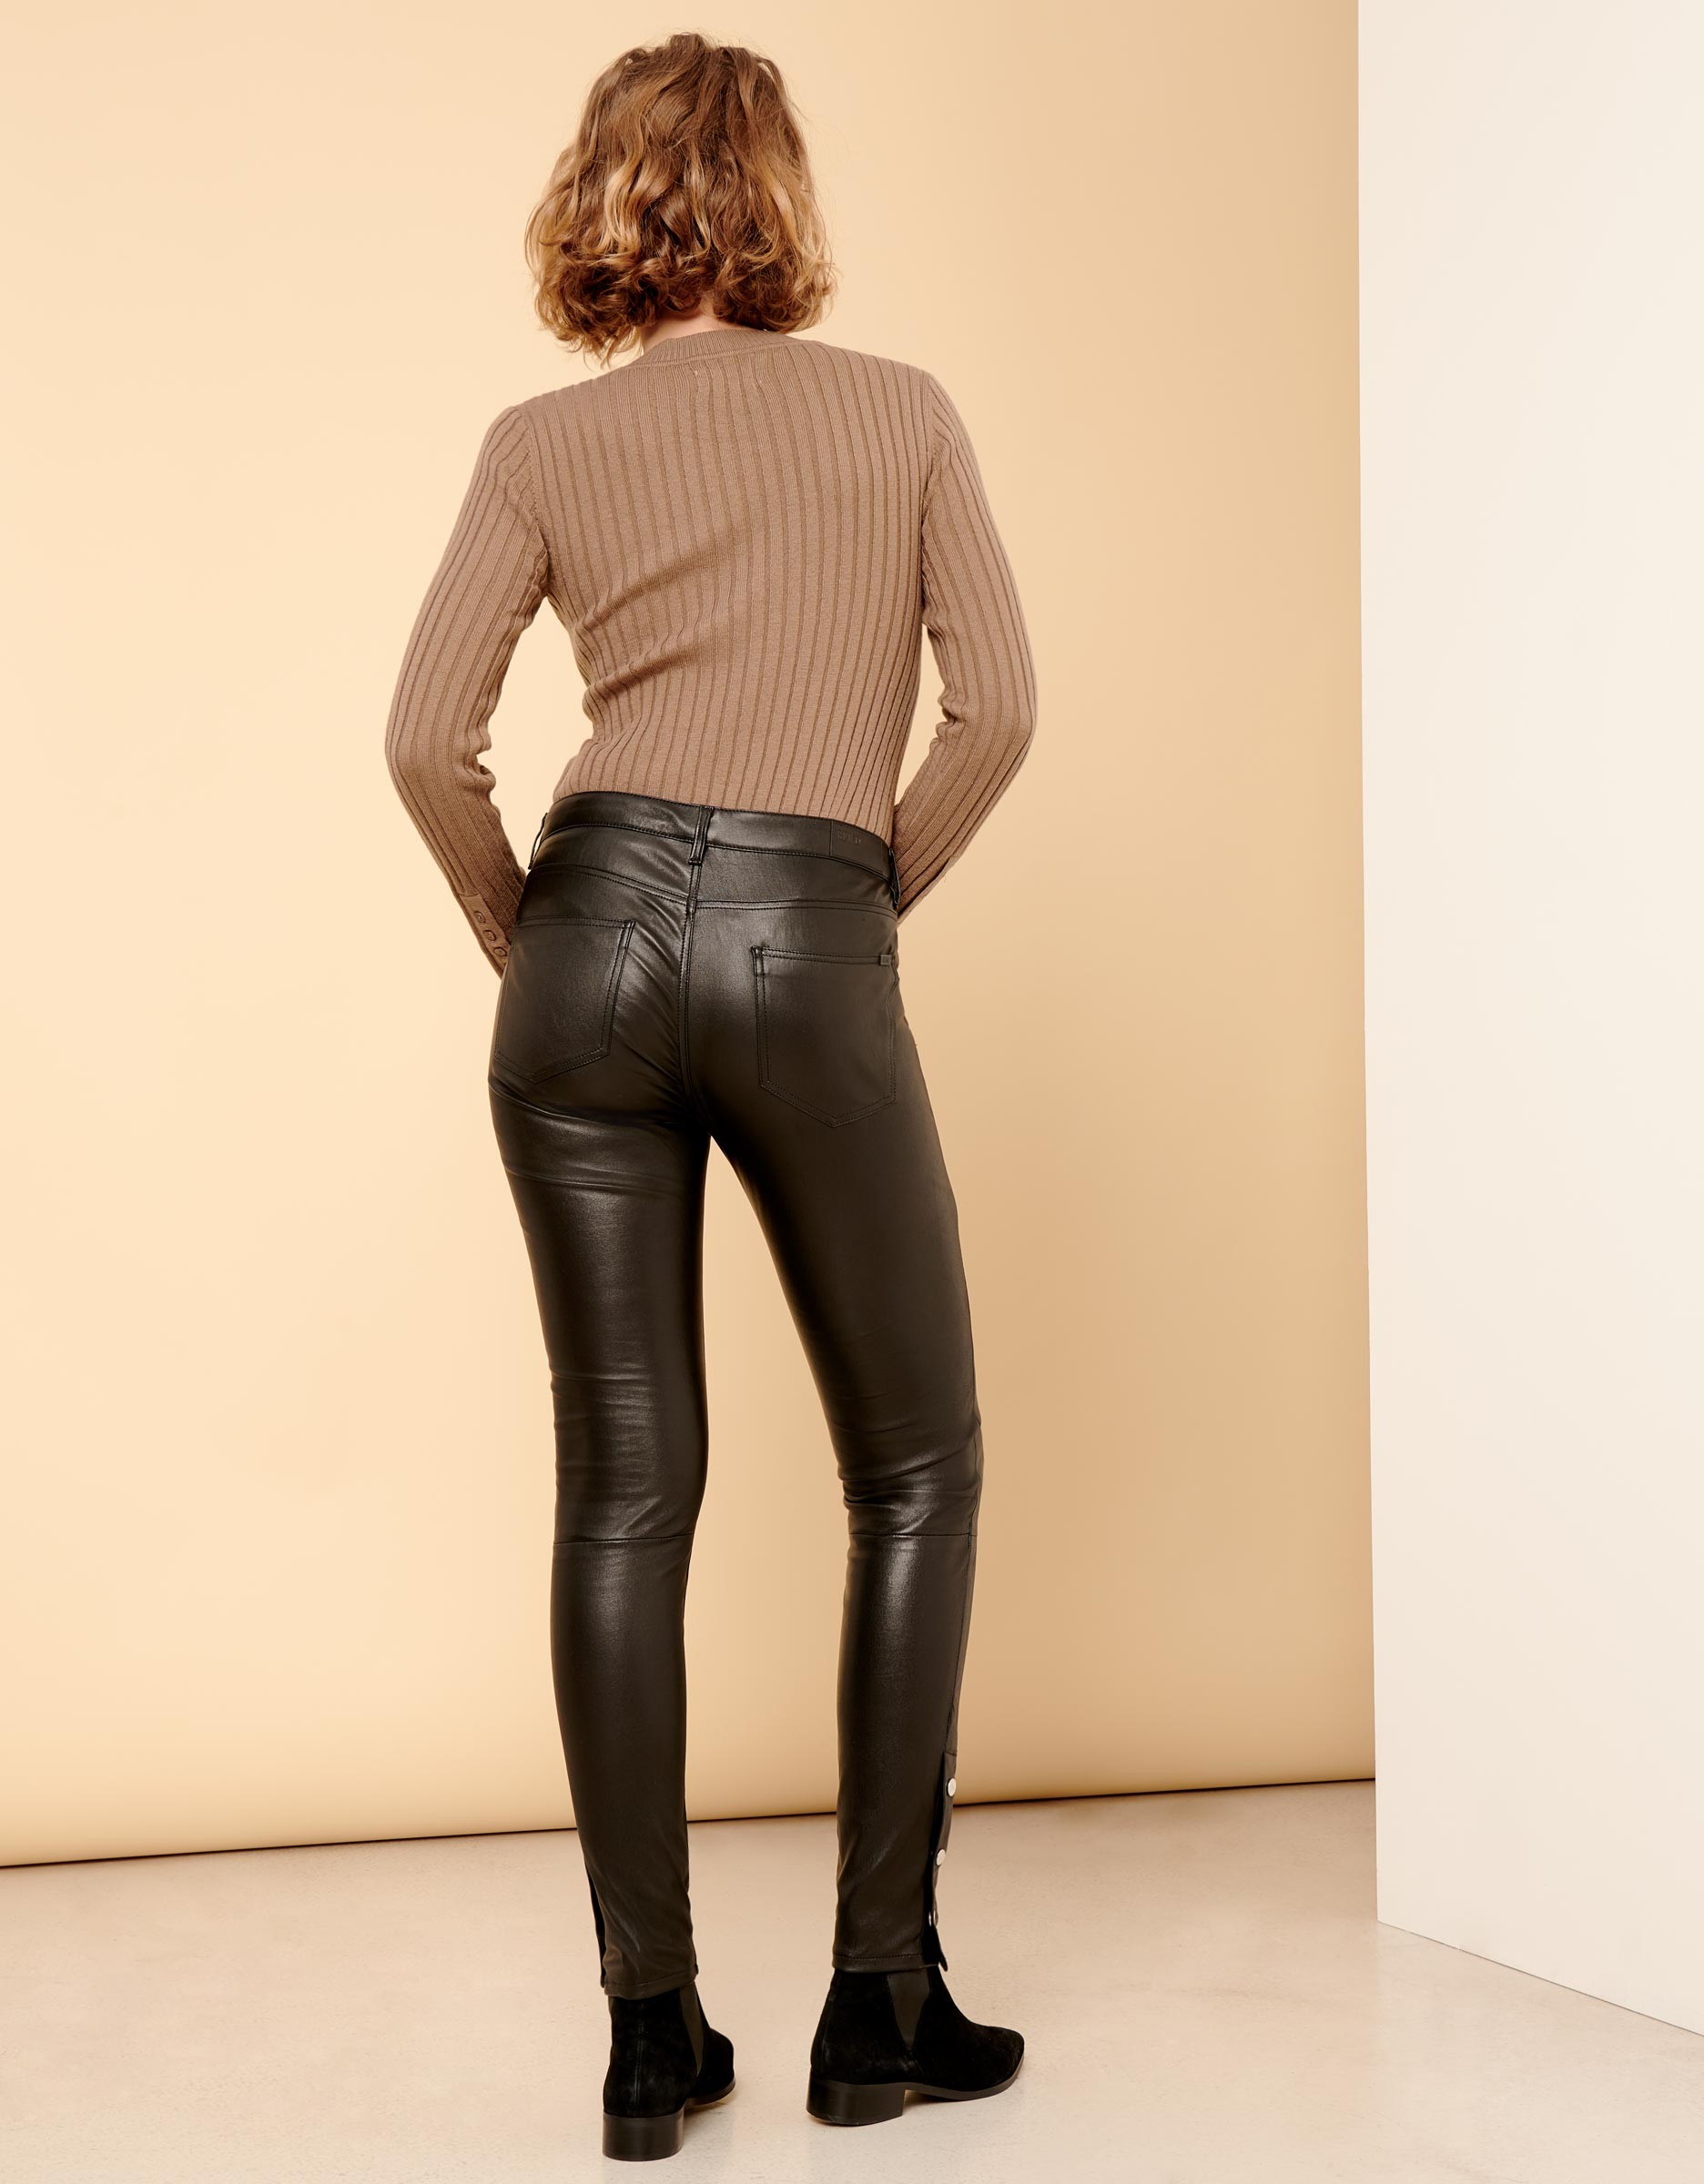 women in leather pants